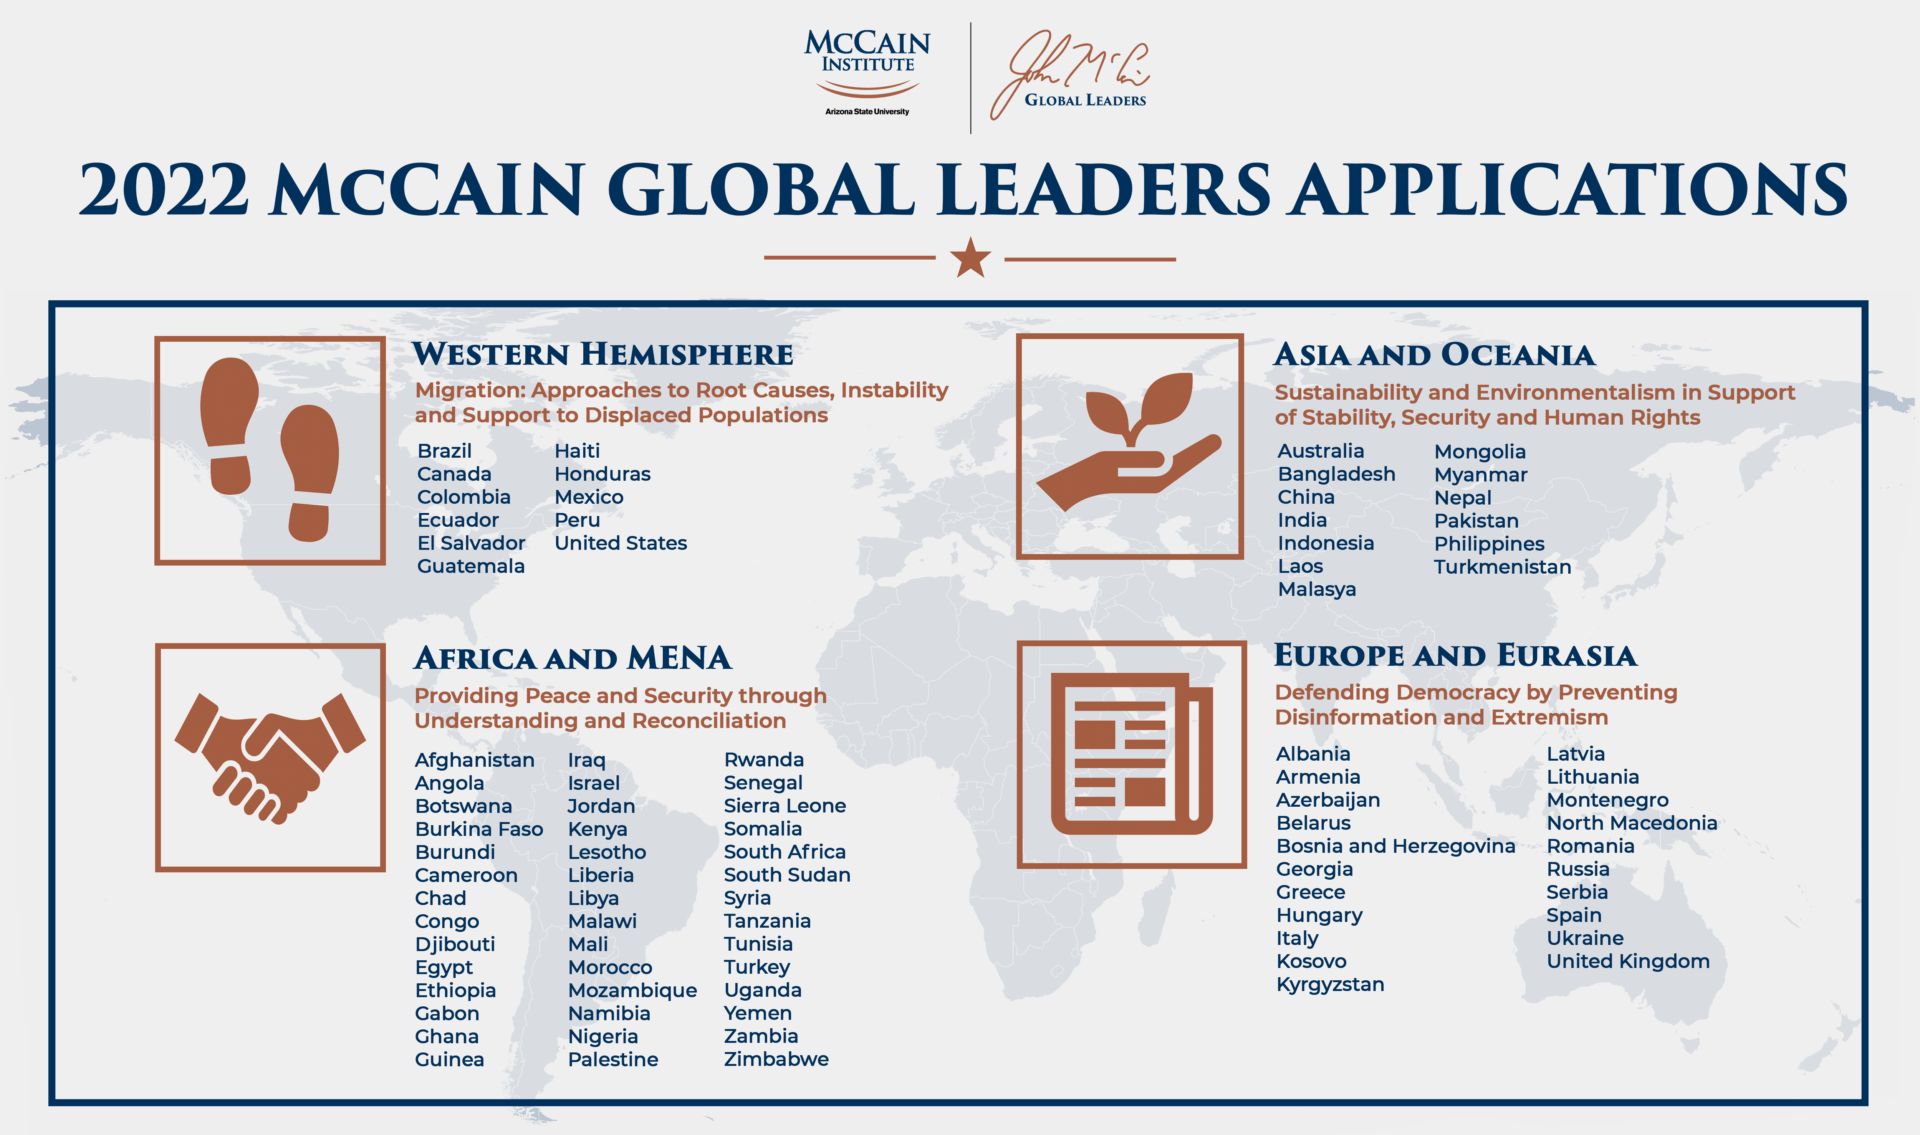 McCain Global Leaders 2022 Application Numbers